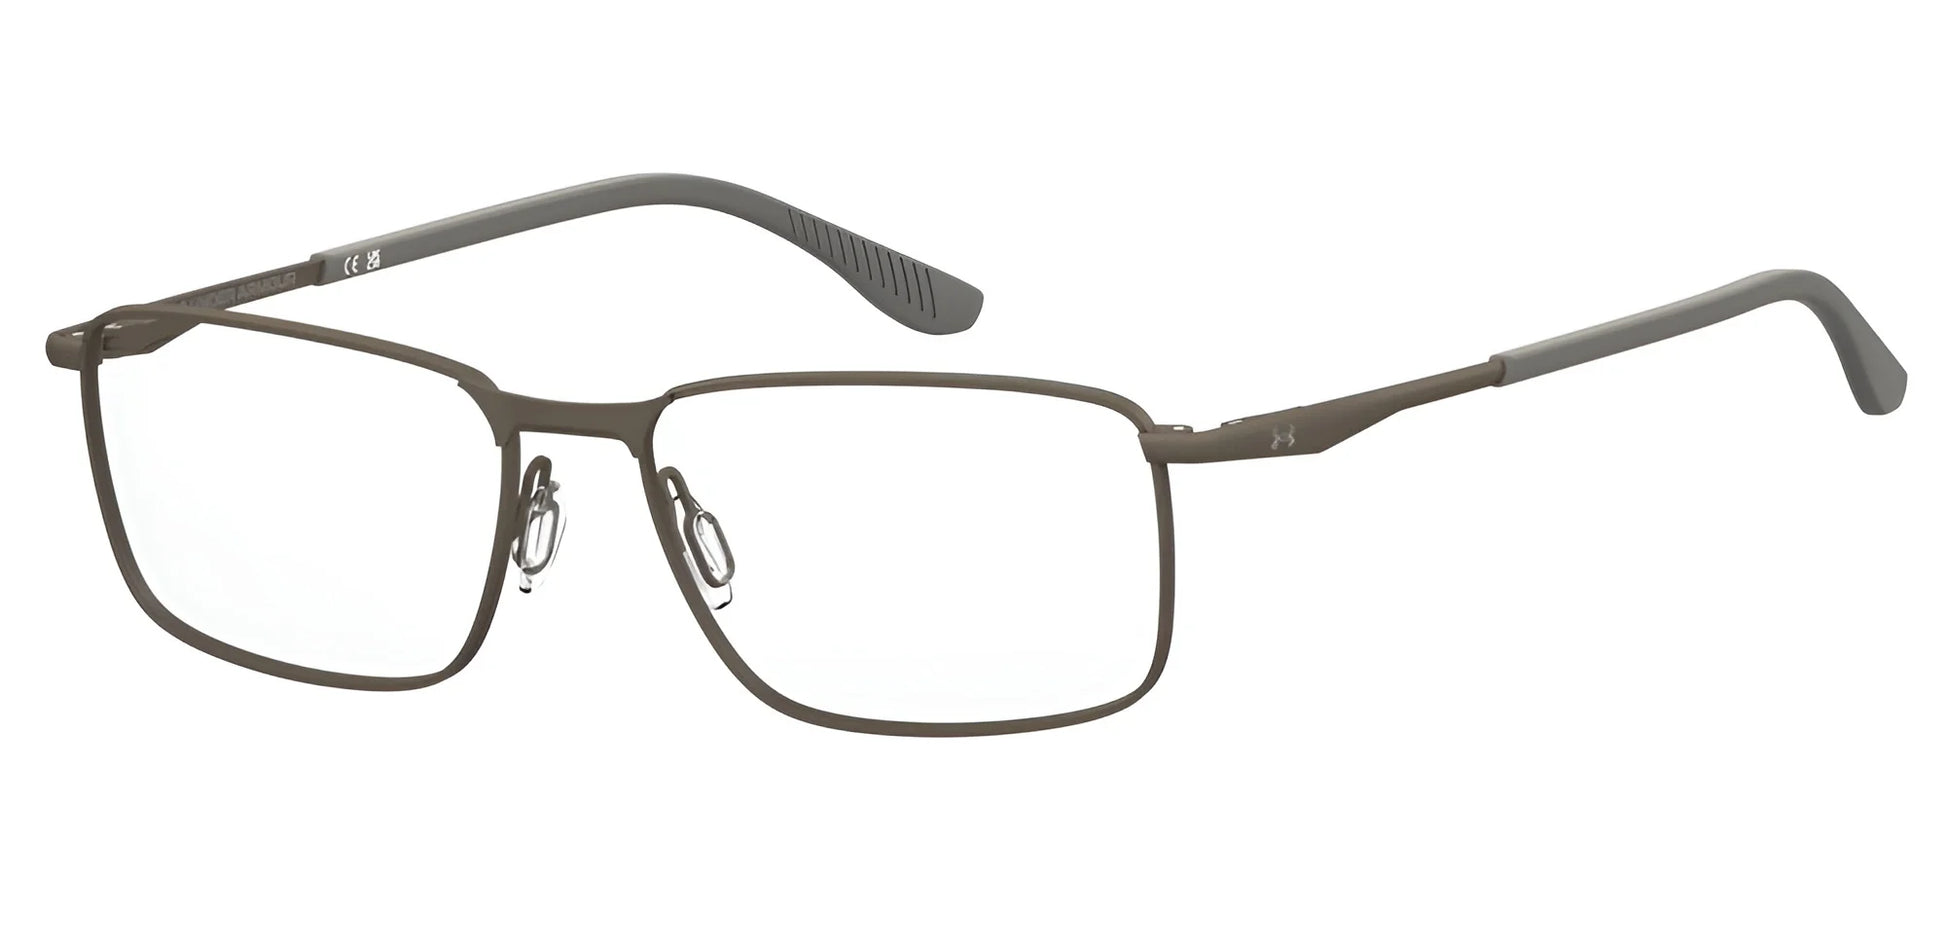 Under Armour 5071 Eyeglasses Greybrown